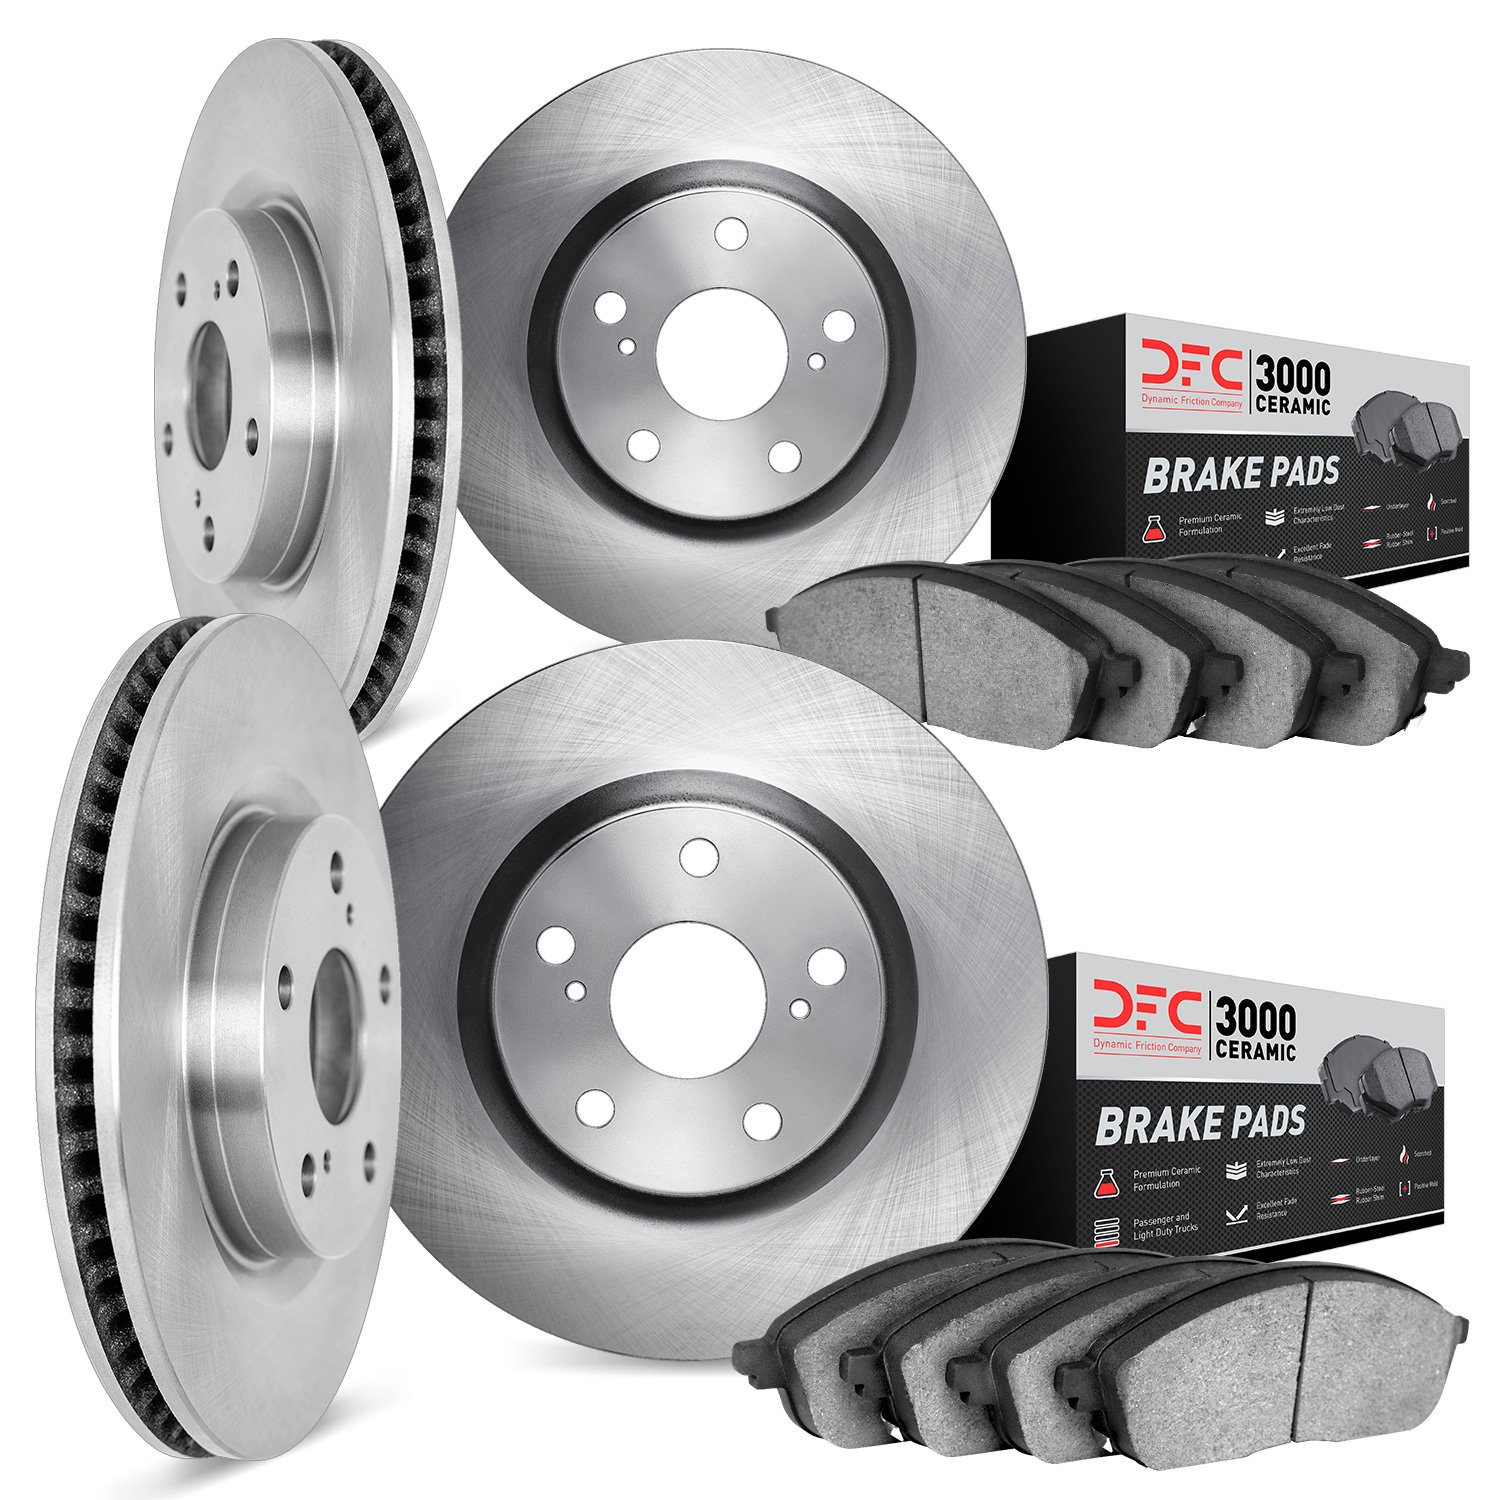 6304-13035 Brake Rotors with 3000-Series Ceramic Brake Pads Kit, 2014-2018 Subaru, Position: Front and Rear